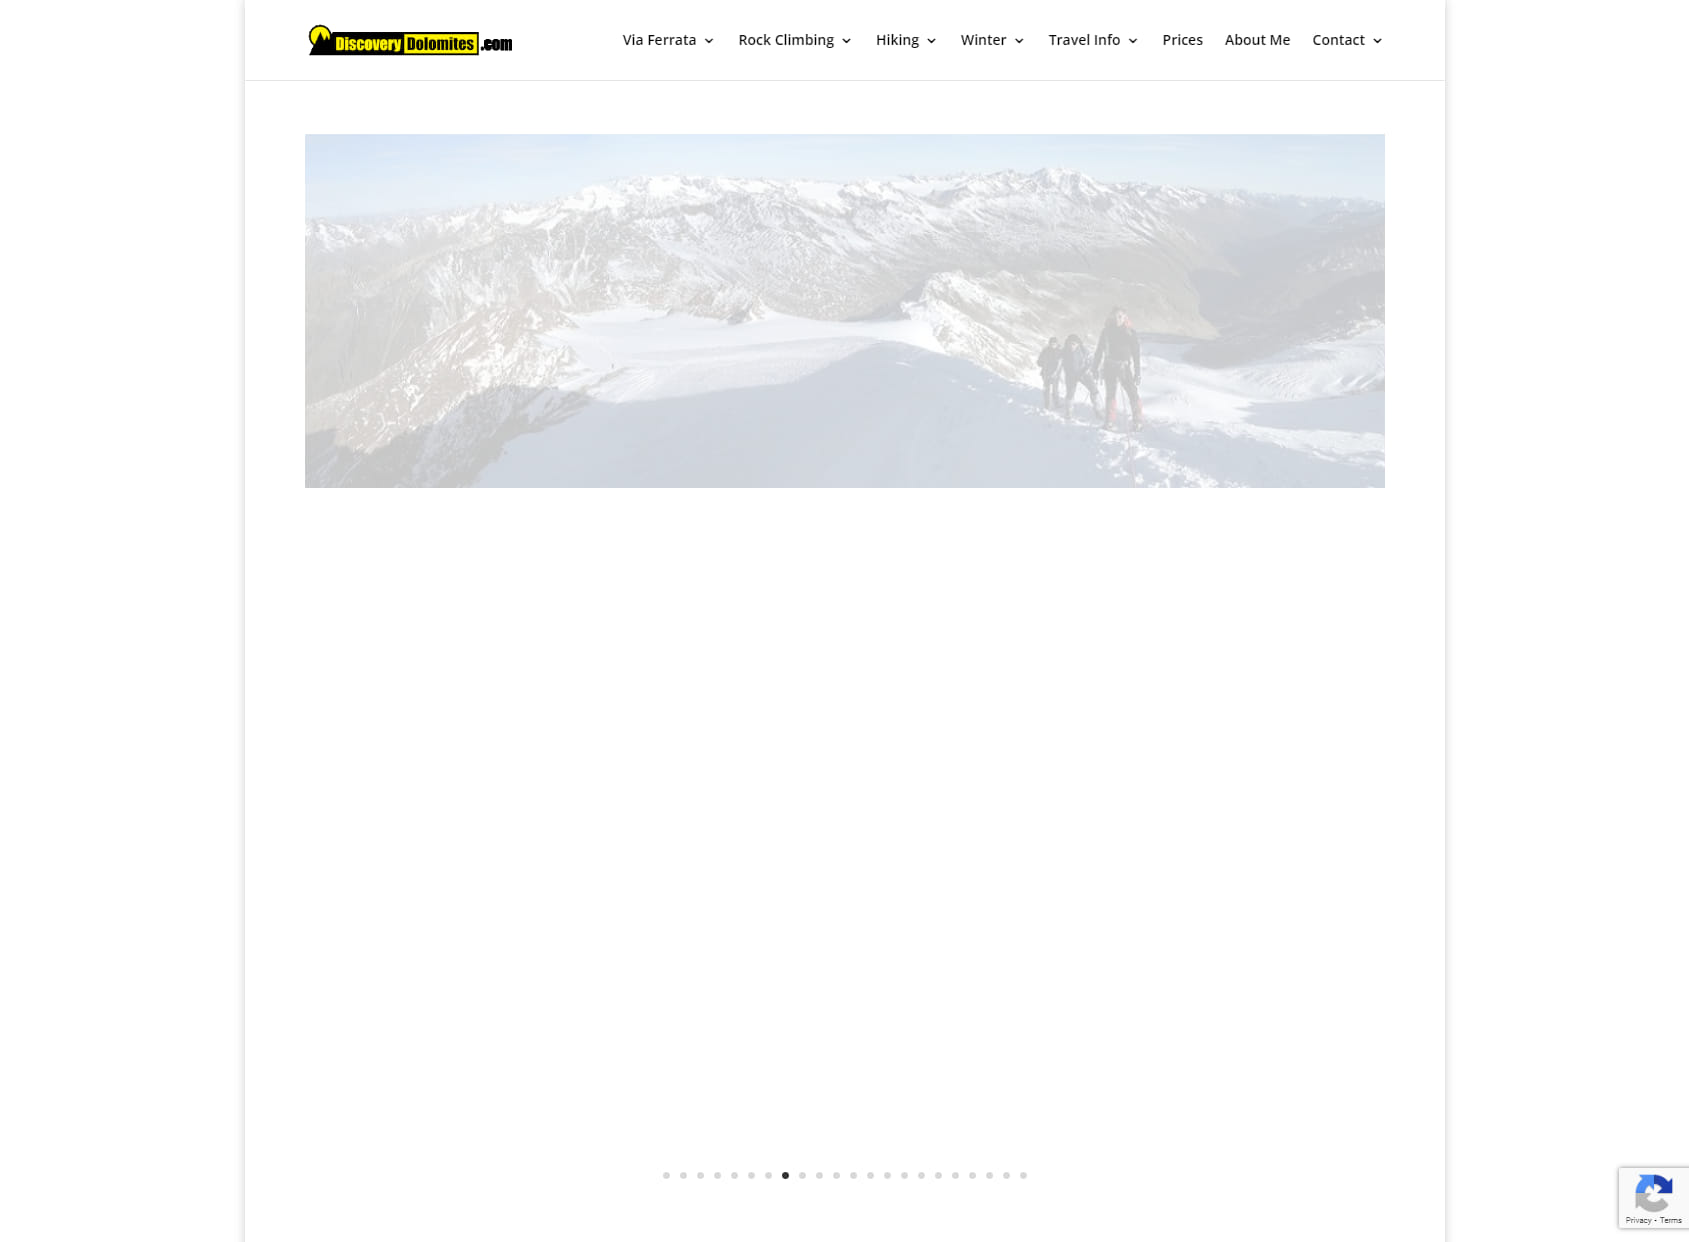 Discovery Dolomites Mountain Guide Roberto Iacopelli